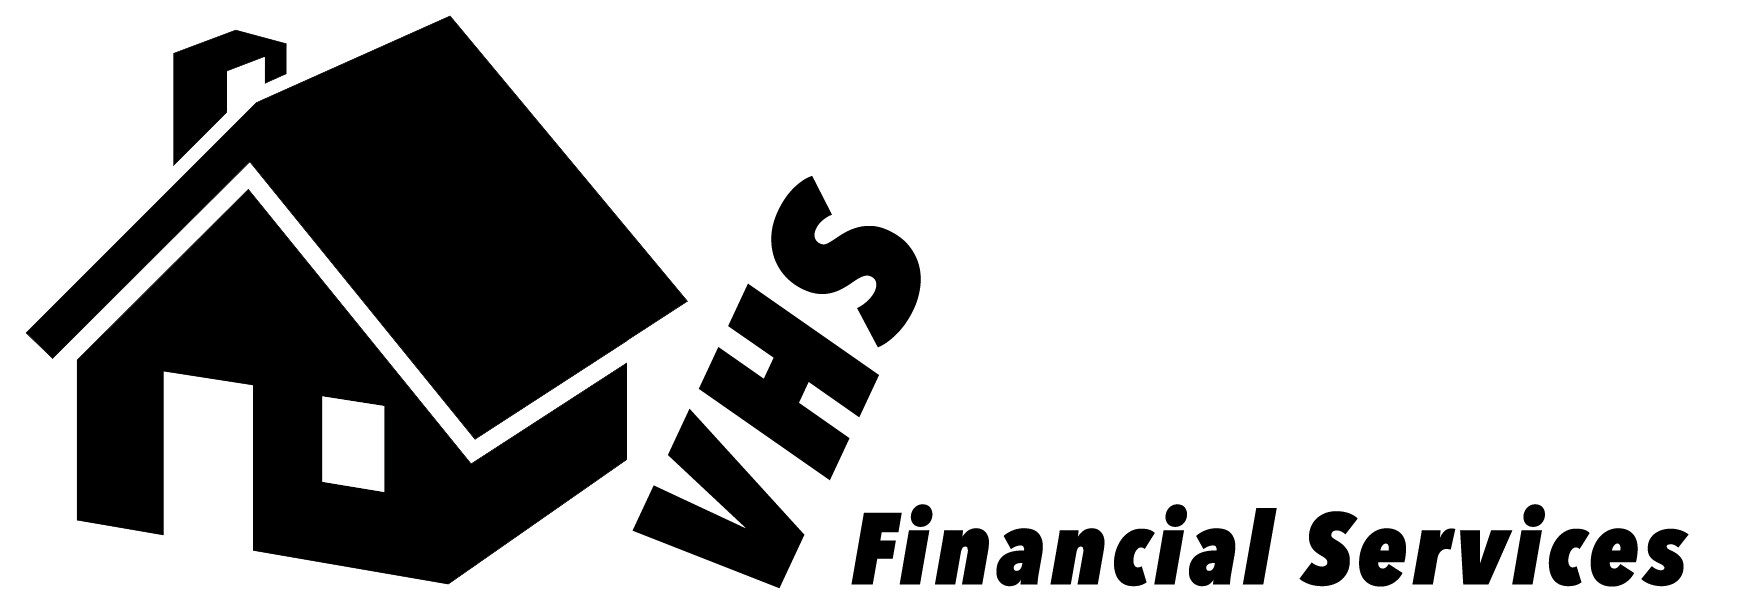 VHS Financial Services Logo